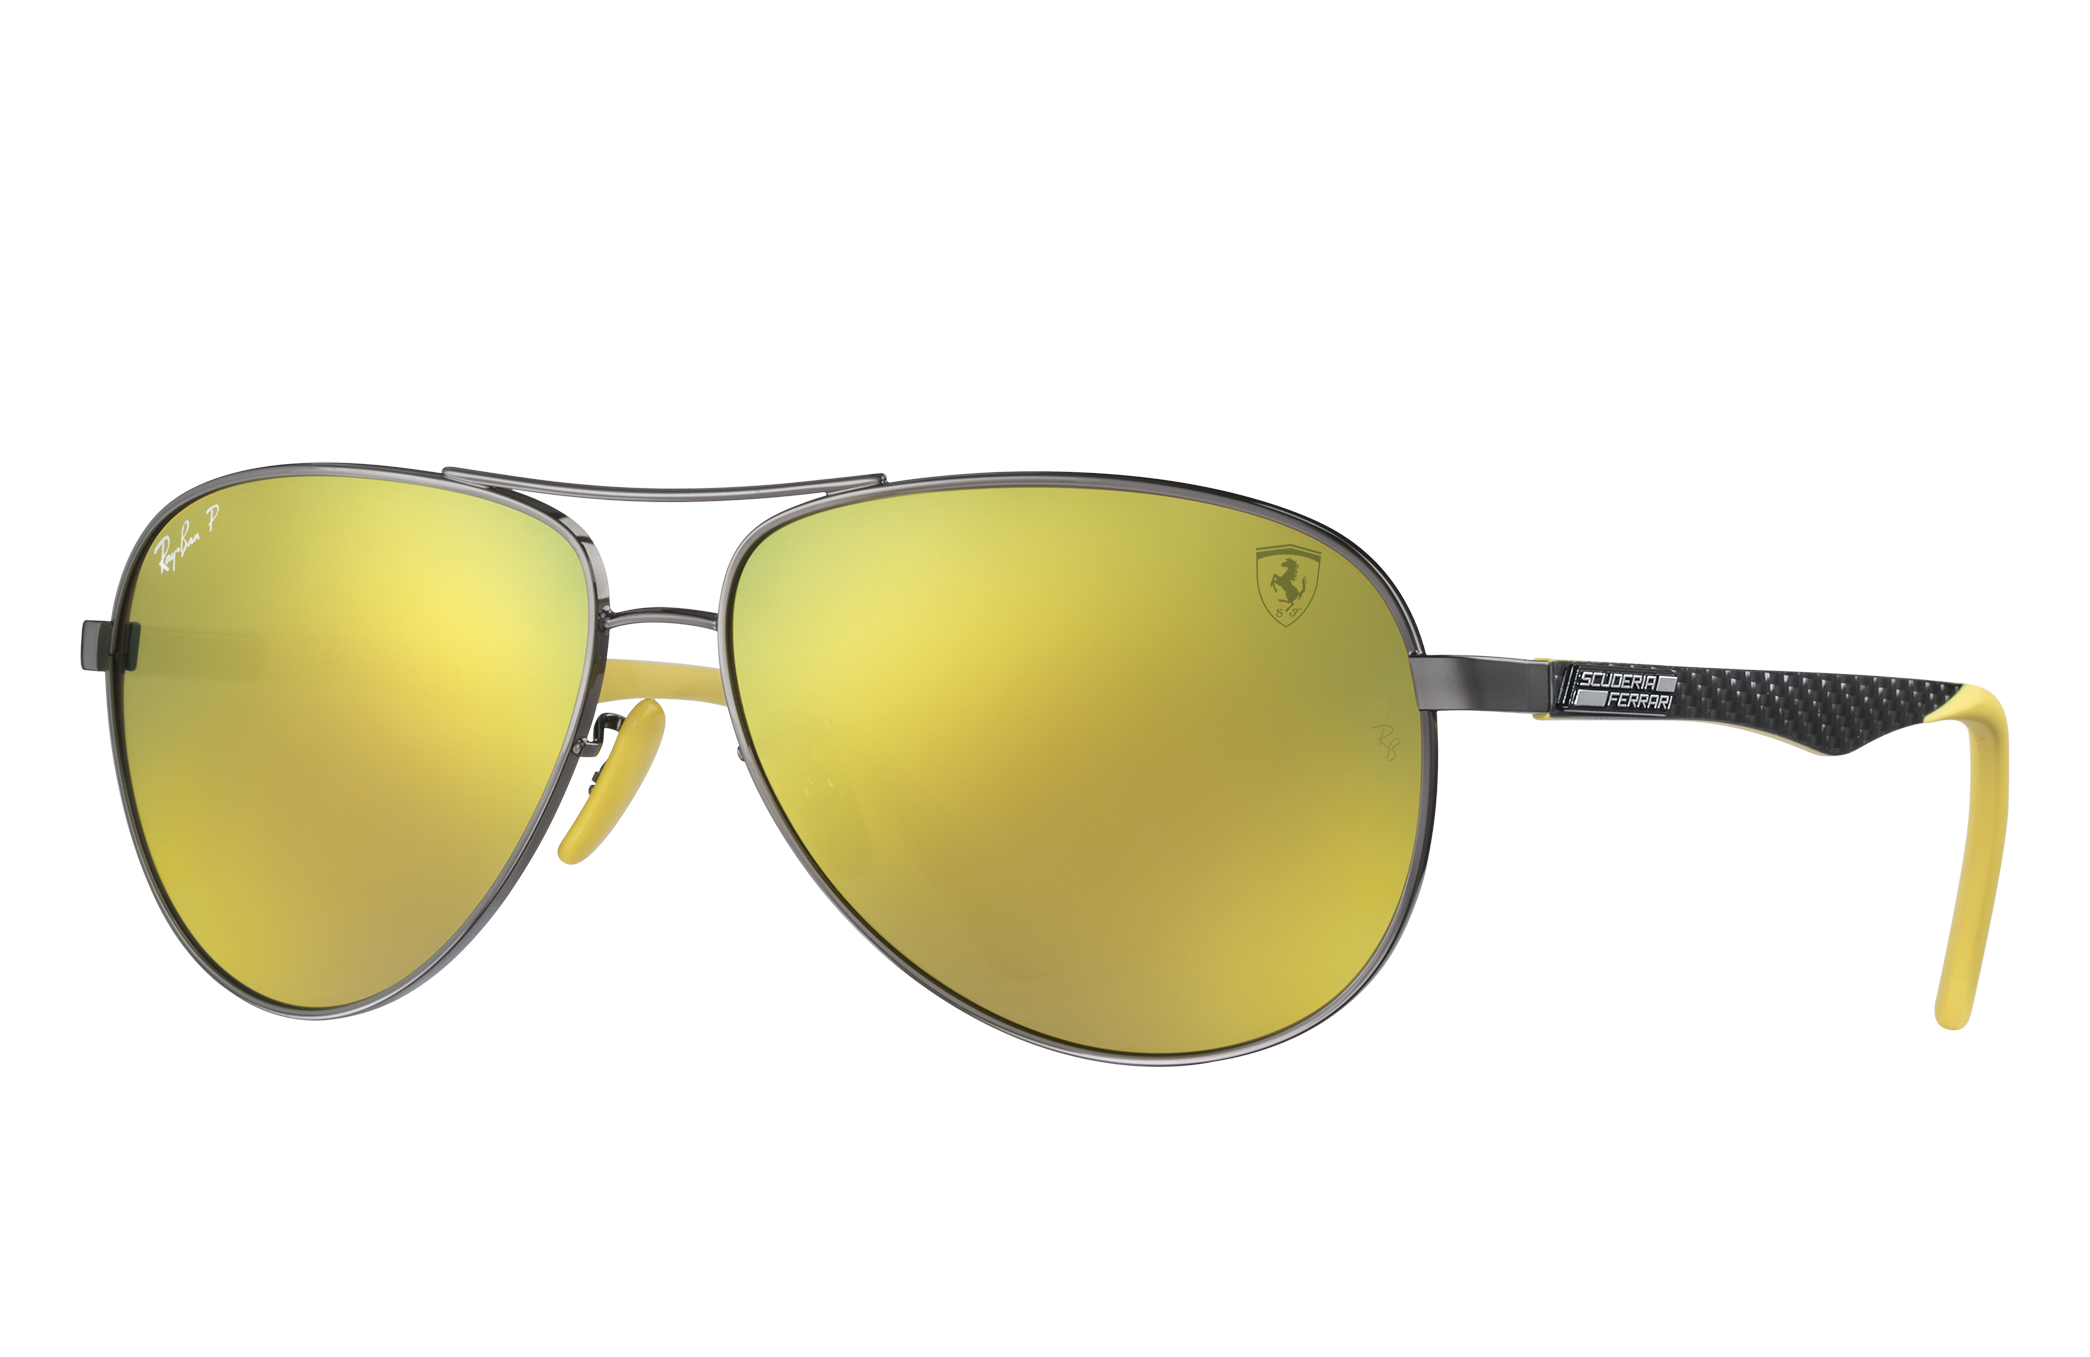 Scuderia Ferrari Singapore Limited Edition Sunglasses in Gunmetal and Gold  Chromance | Ray-Ban®